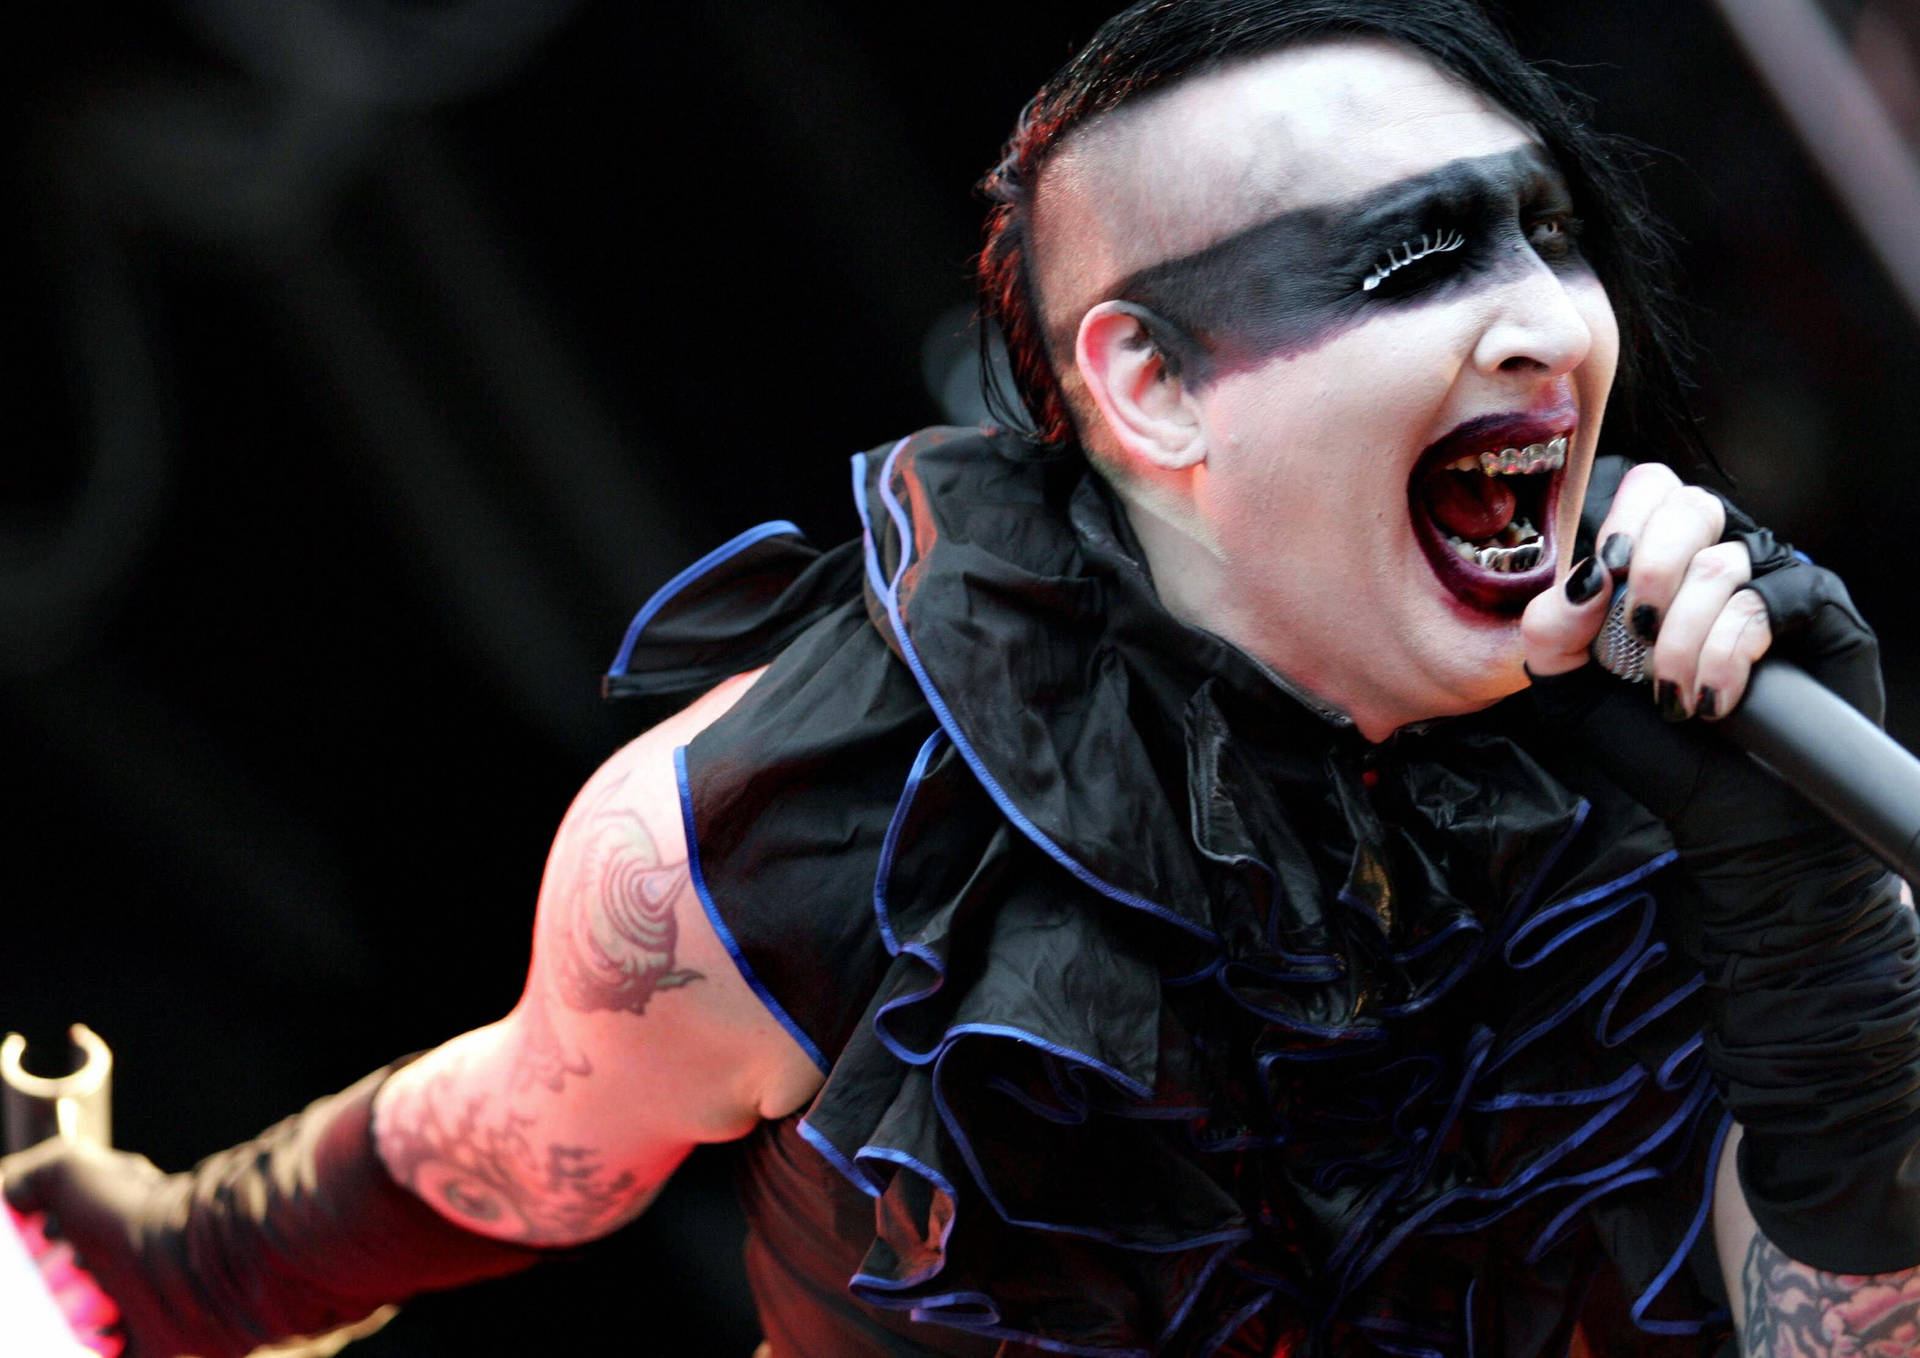 Unosguardo Iconico - Marilyn Manson Sfondo